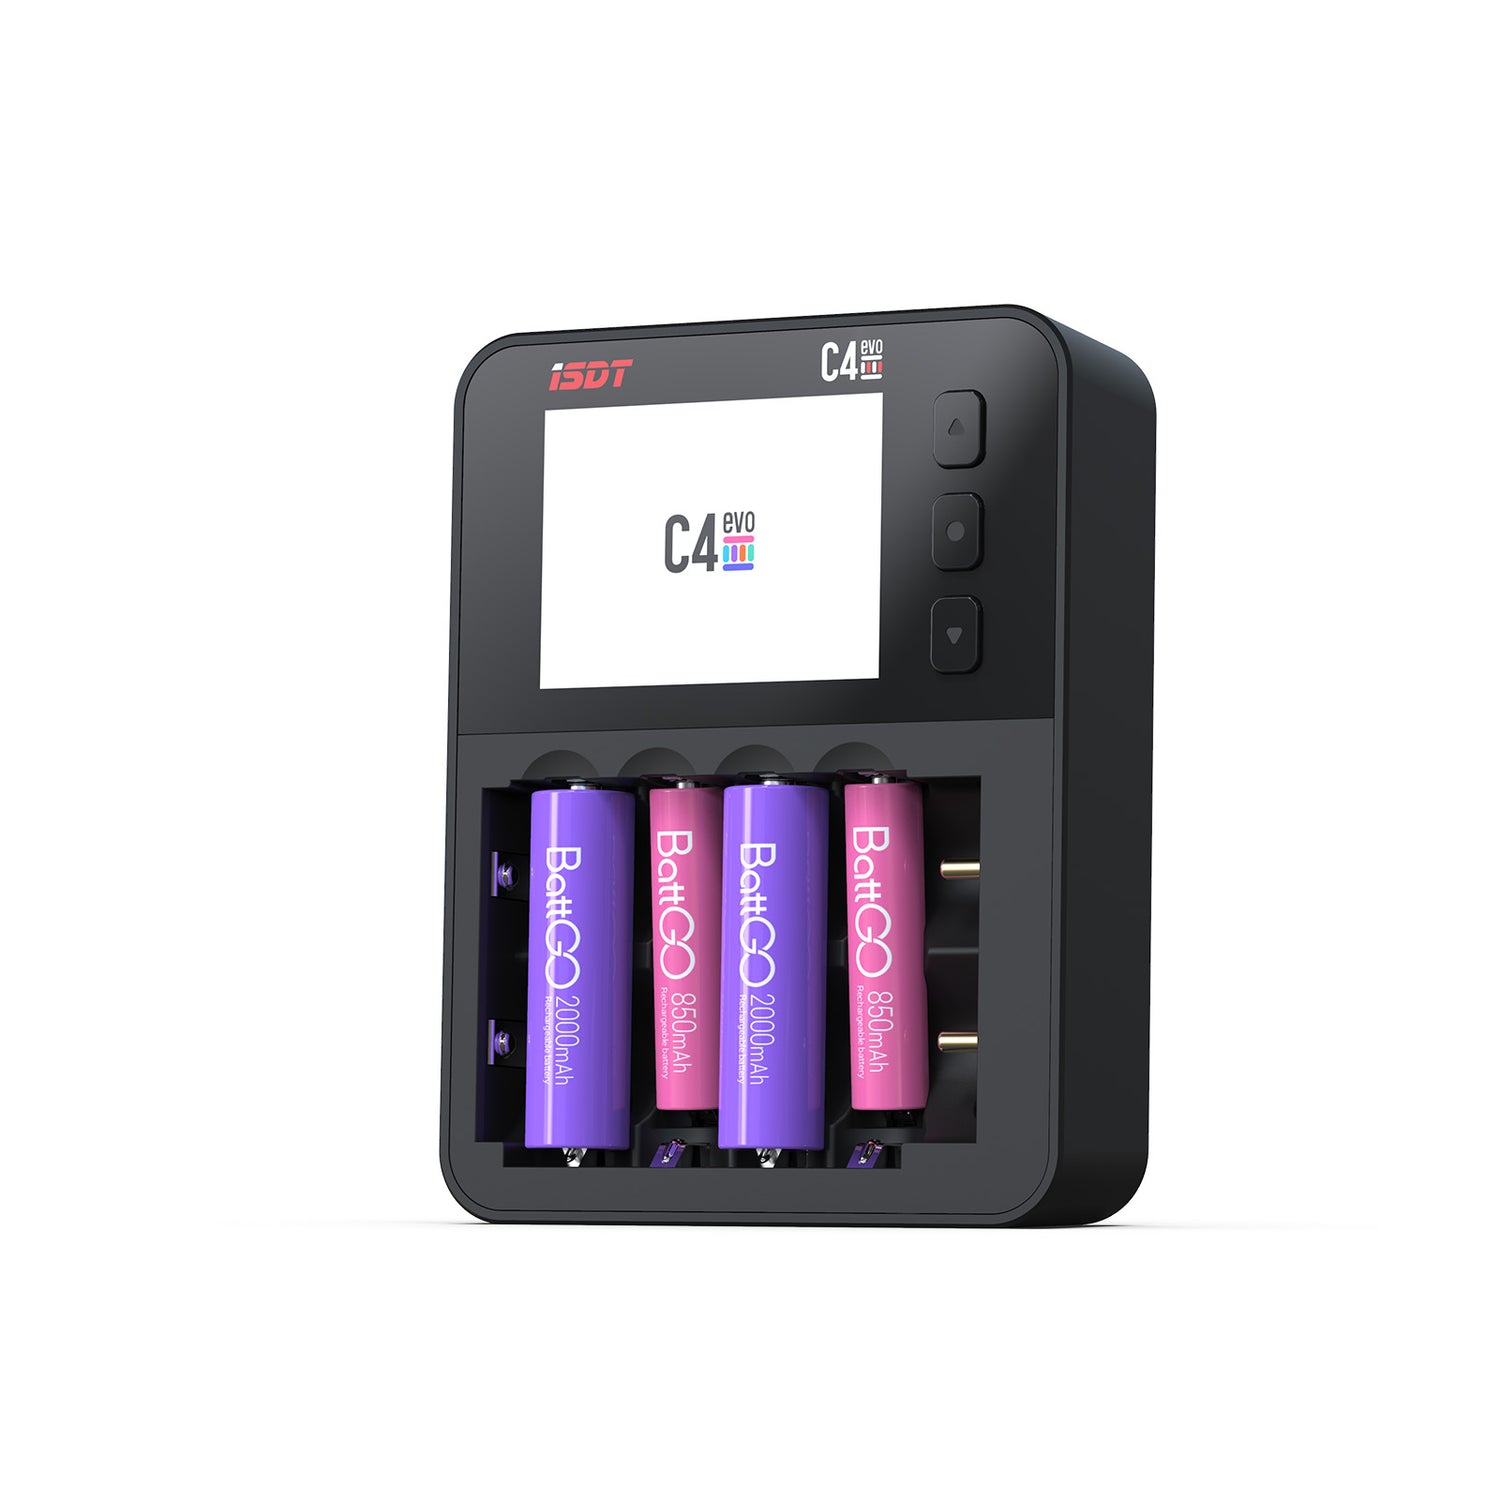 C4 Evo SMIT Batterie Ladegeräter fir AA AAA 18650 26700 Batterie mat IPS Display Display